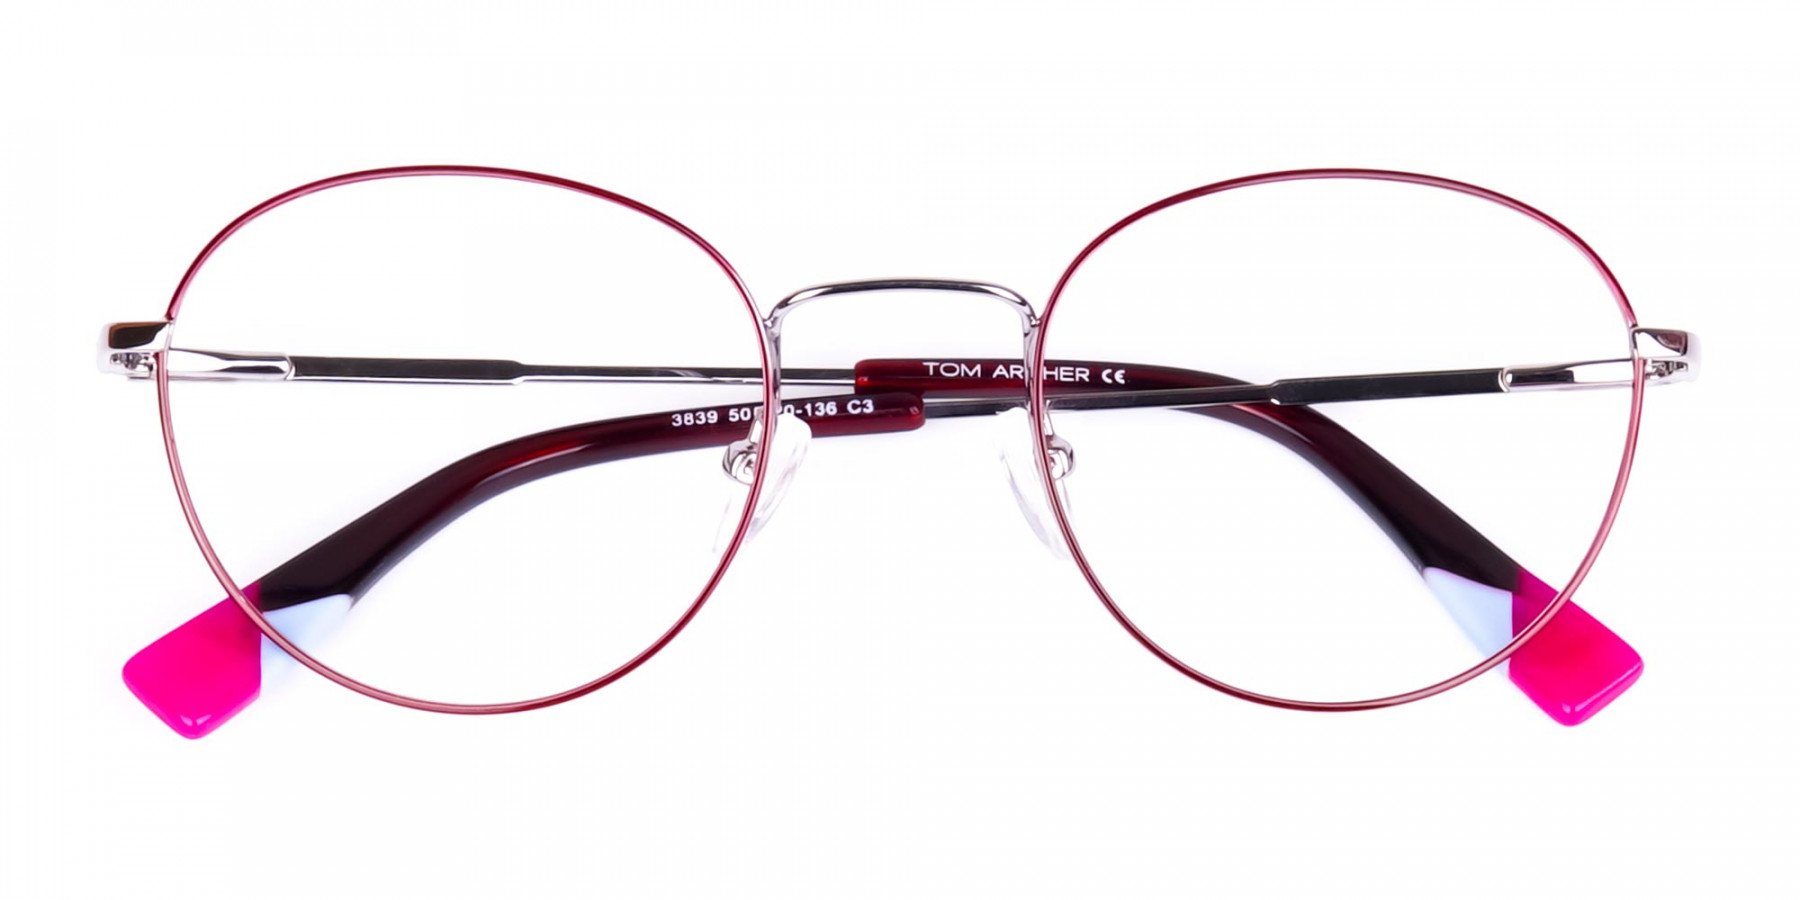 Stylish-Burgundy-and-Silver-Round-Glasses-1